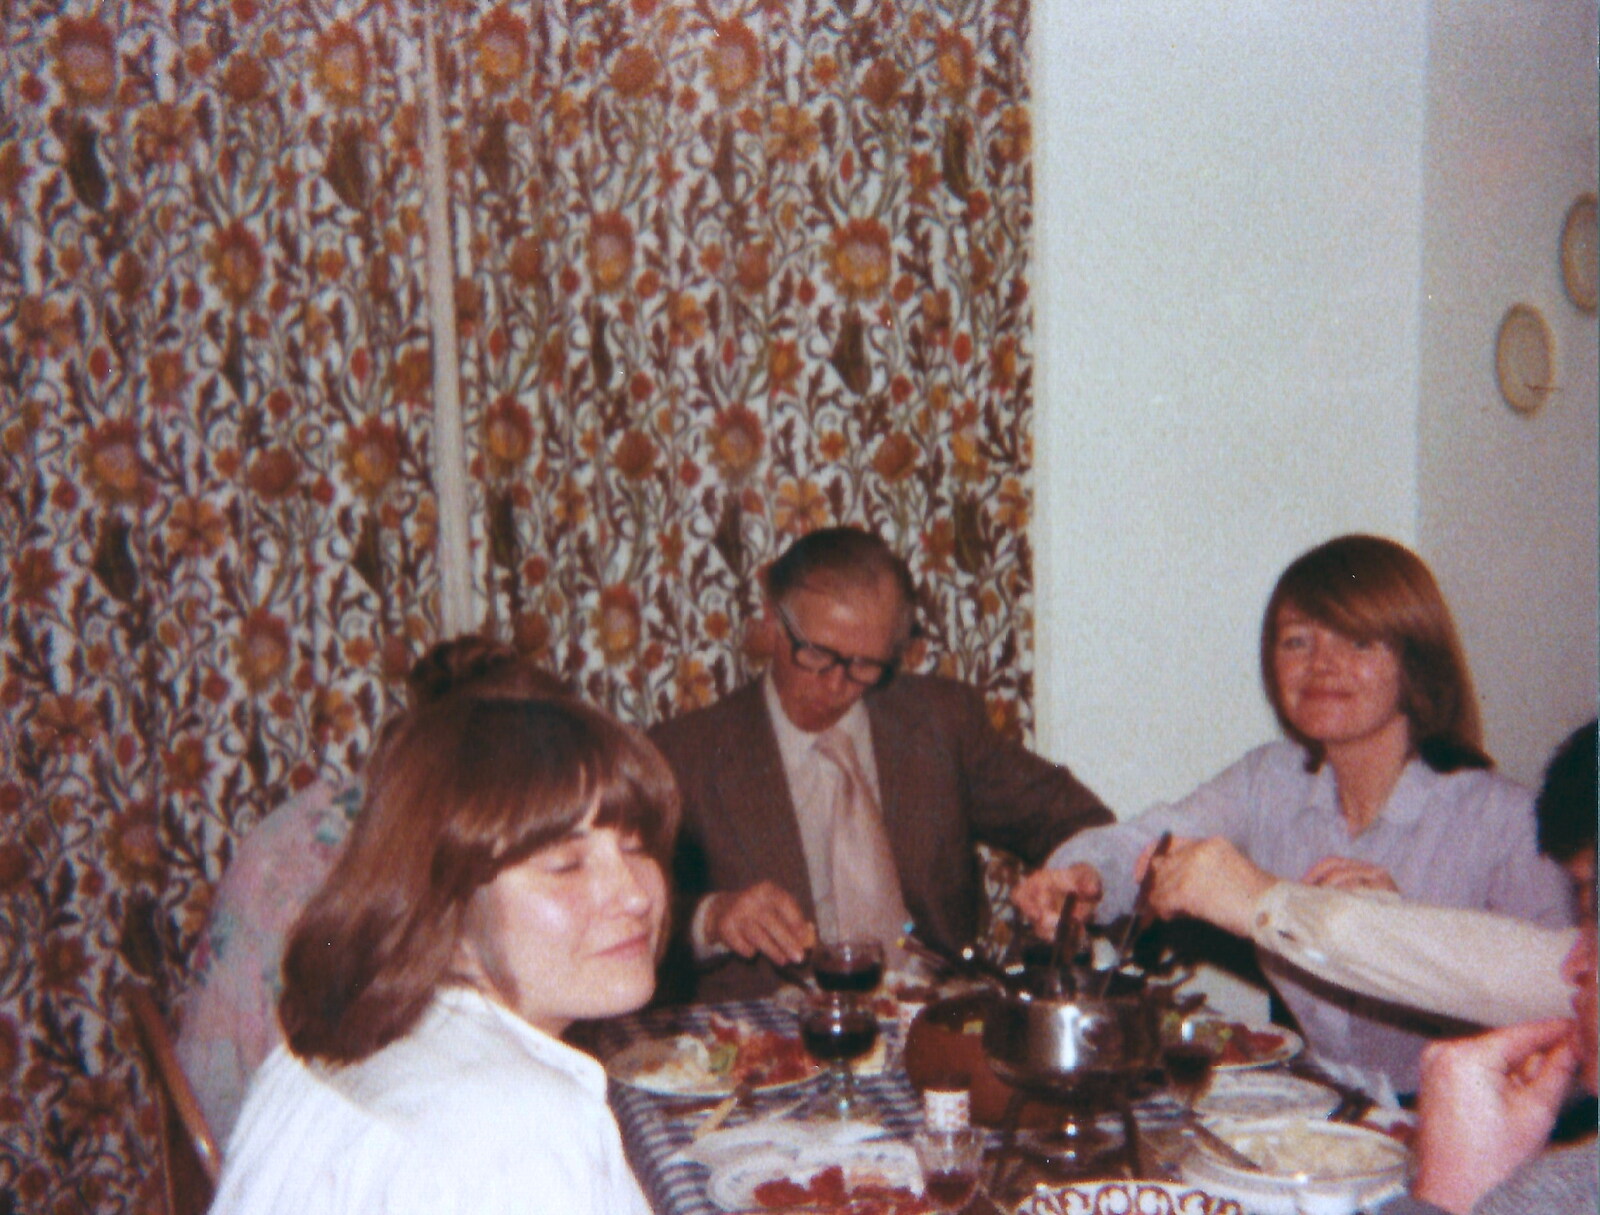 Family History: Danesbury Avenue, Tuckton, Christchurch, Dorset - 24th January 2020: It's 1970s fondue time